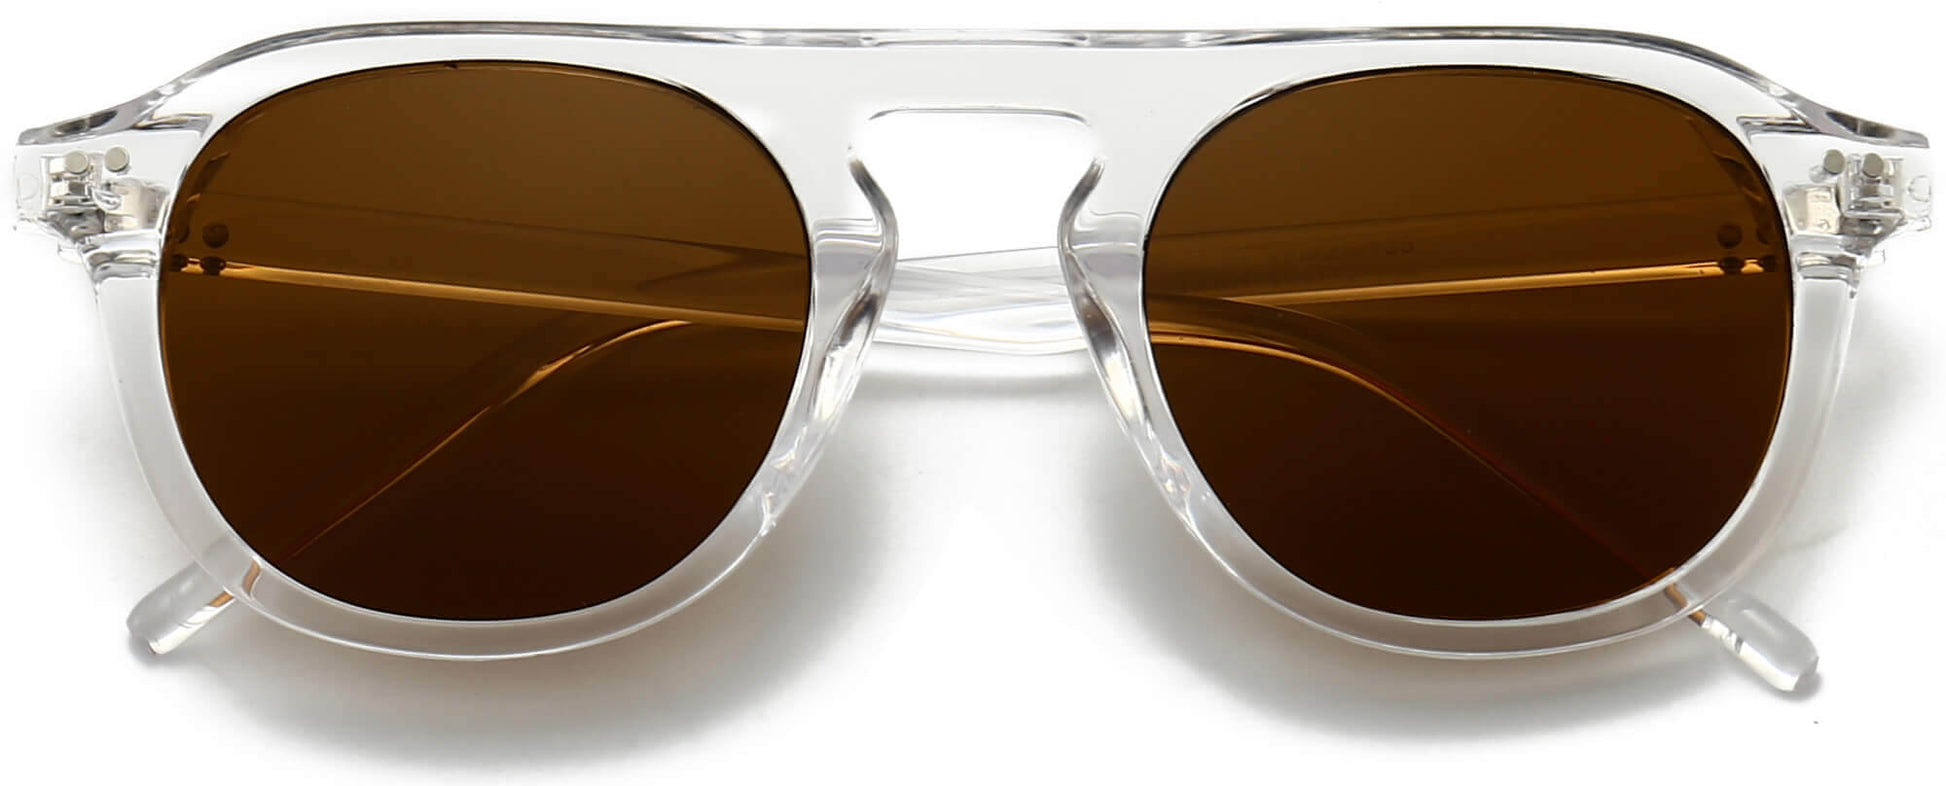 Ezekiel Clear Plastic Sunglasses from ANRRI, closed view